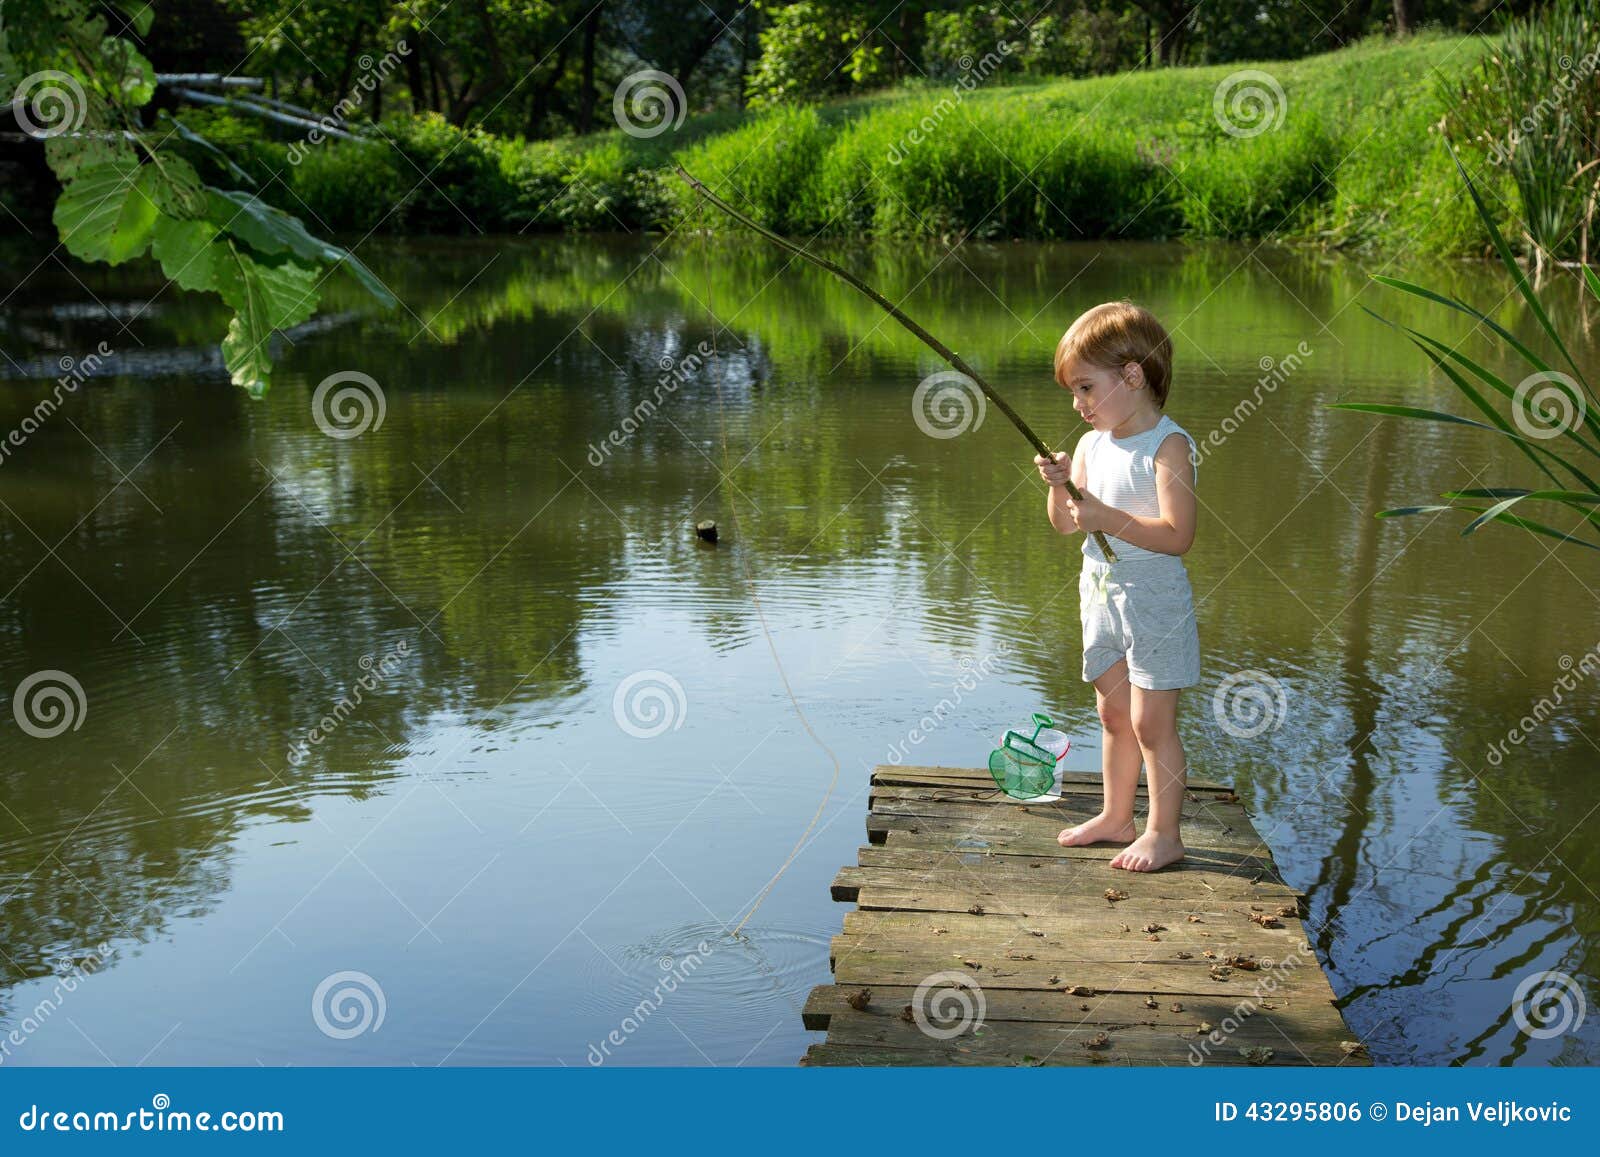 4,151 Little Boy Fishing Stock Photos - Free & Royalty-Free Stock